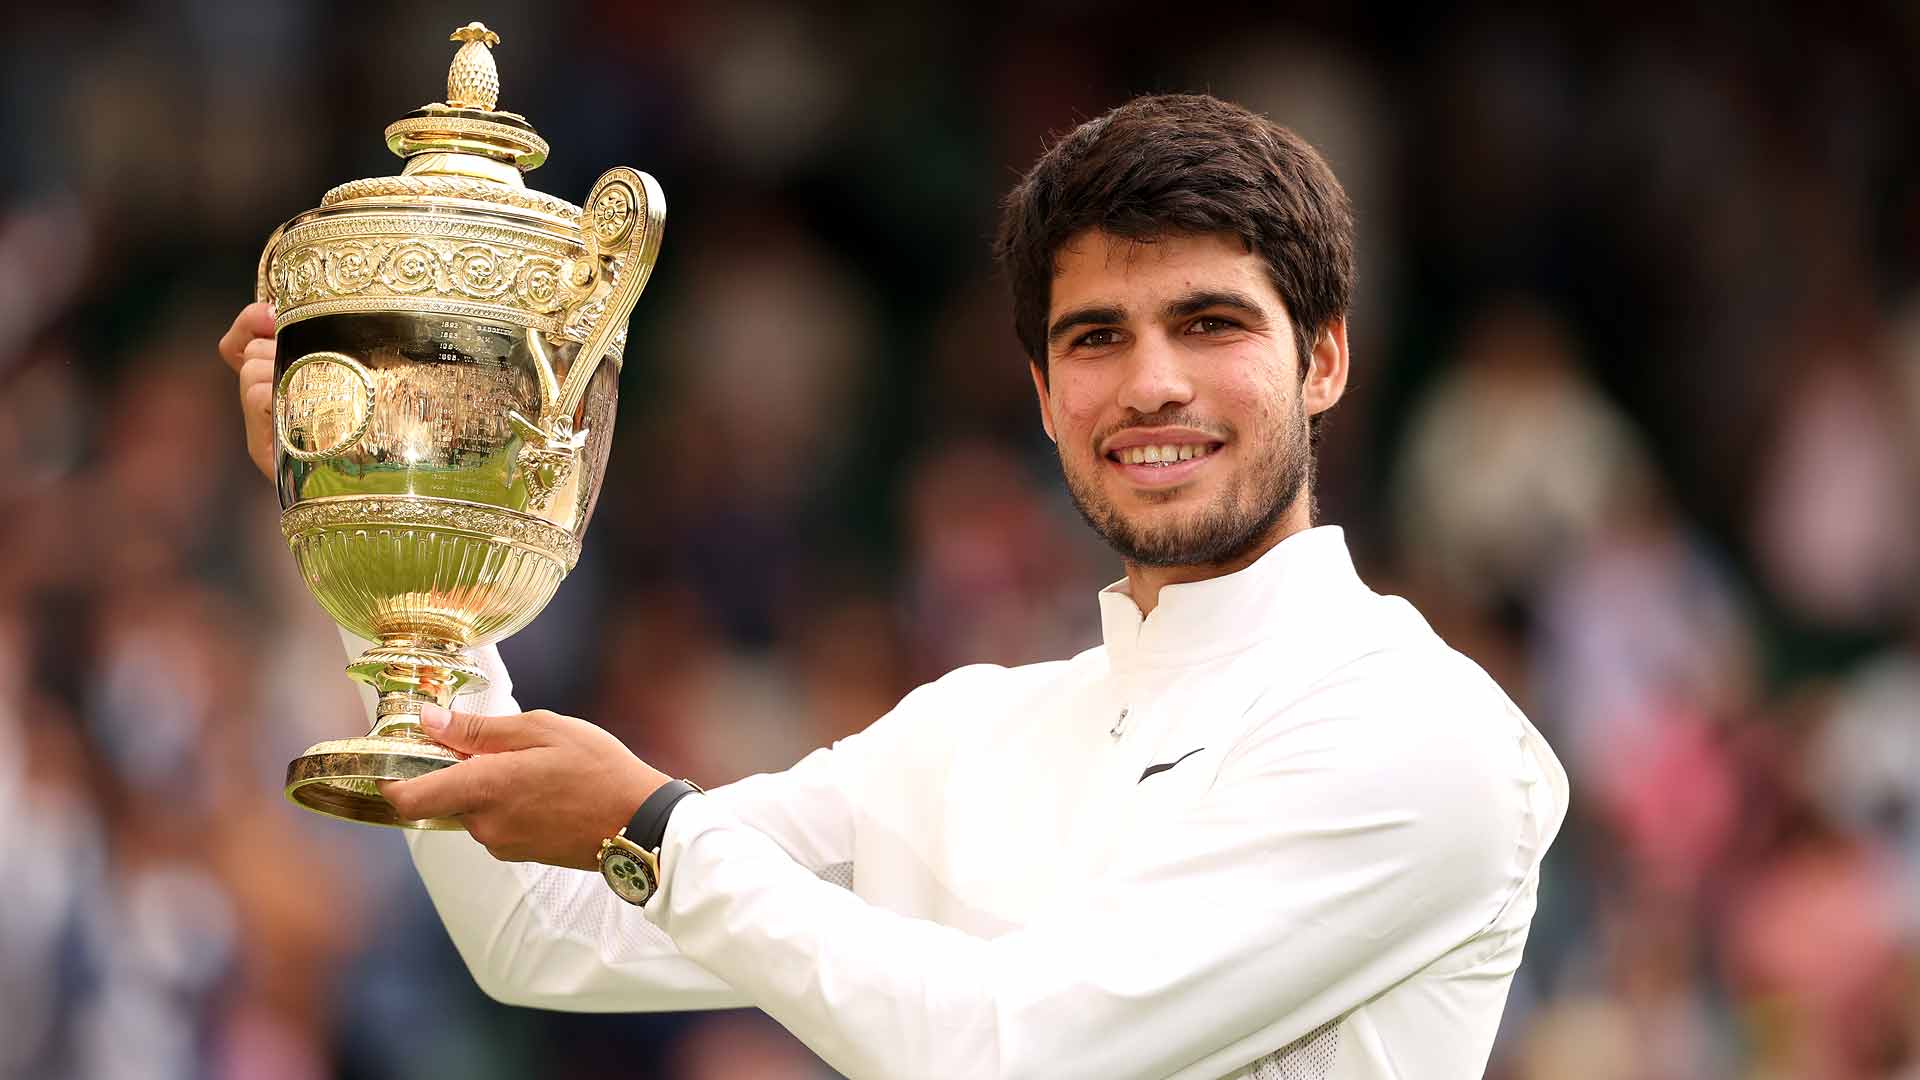 Alcaraz vs Djokovic In Wimbledon Final For World No